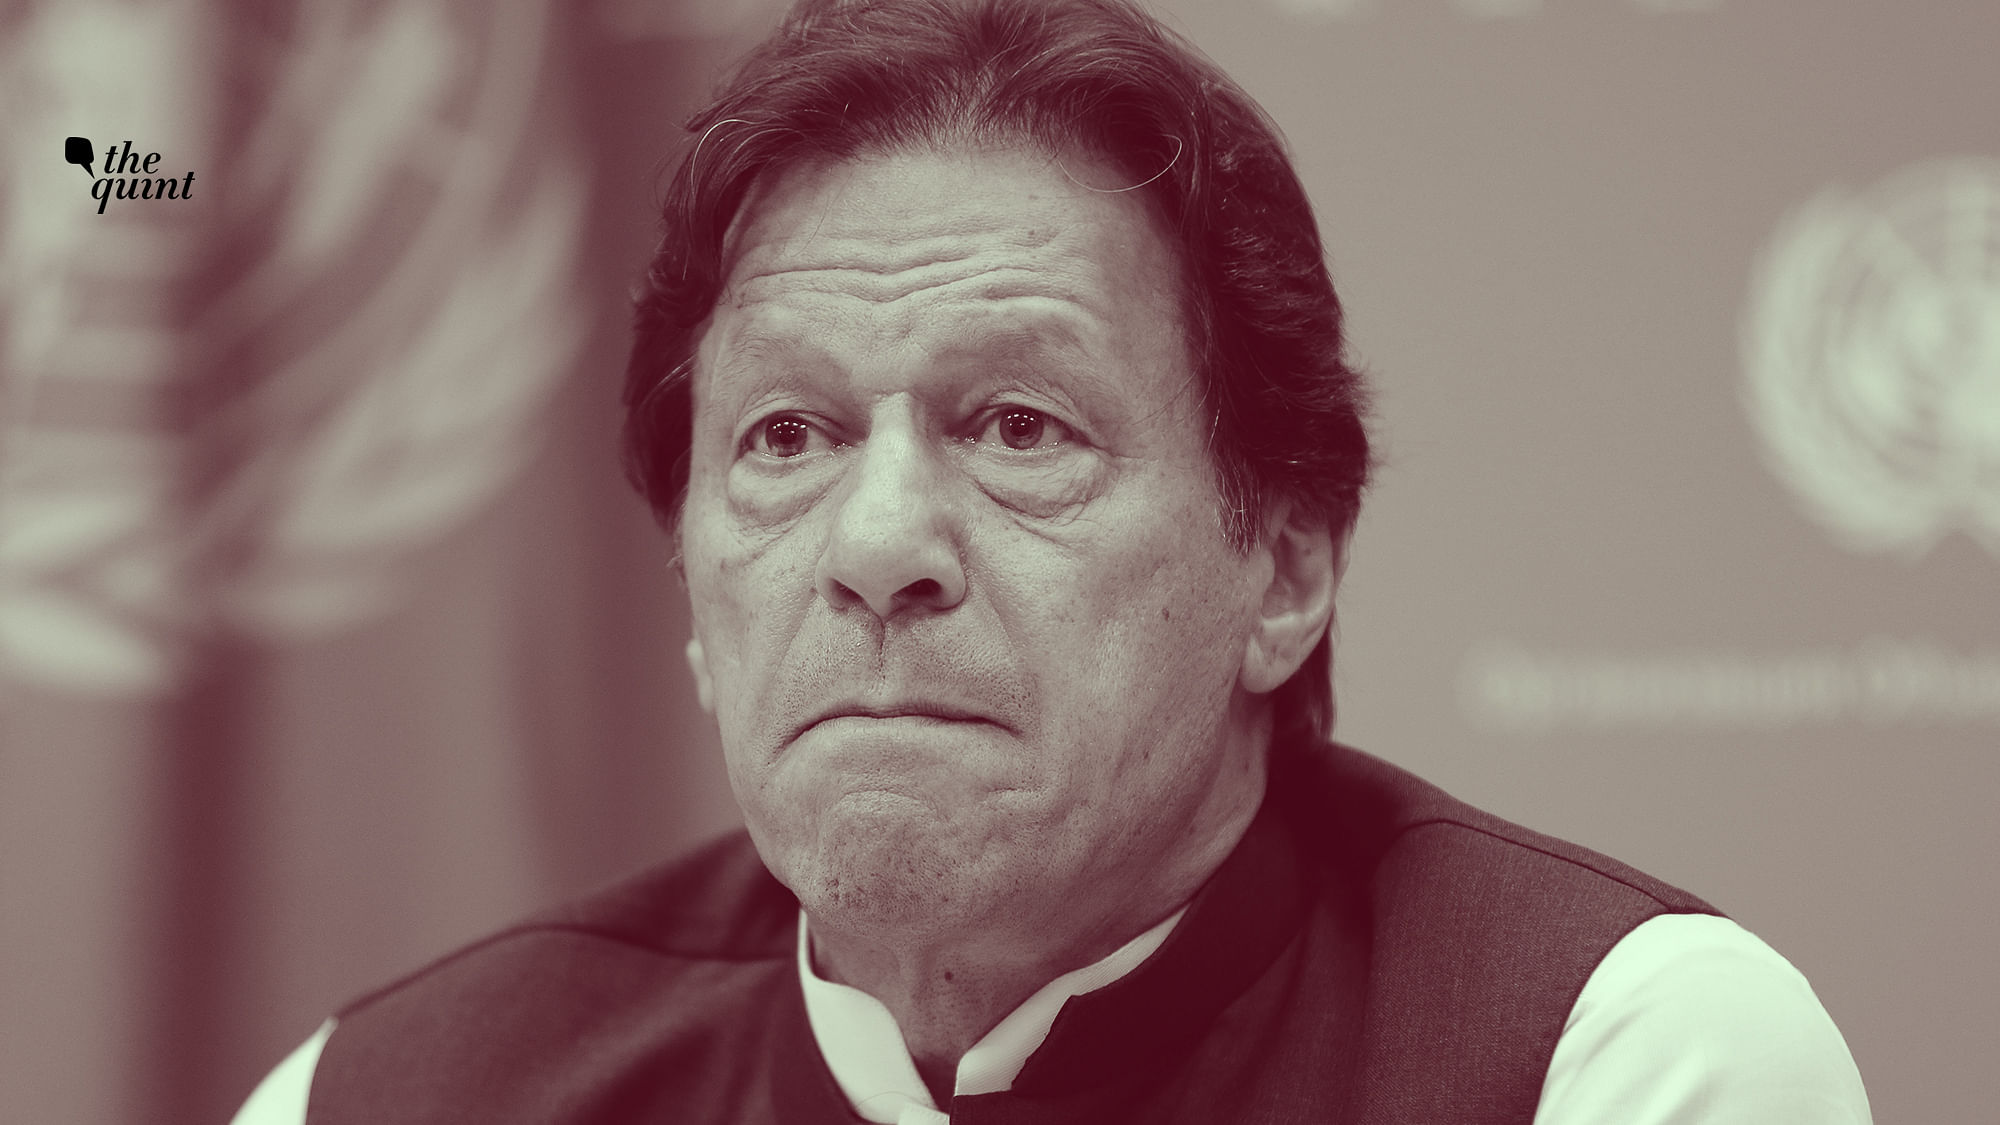 File photo of Pakistan Prime Minister Imran Khan used for representational purposes.